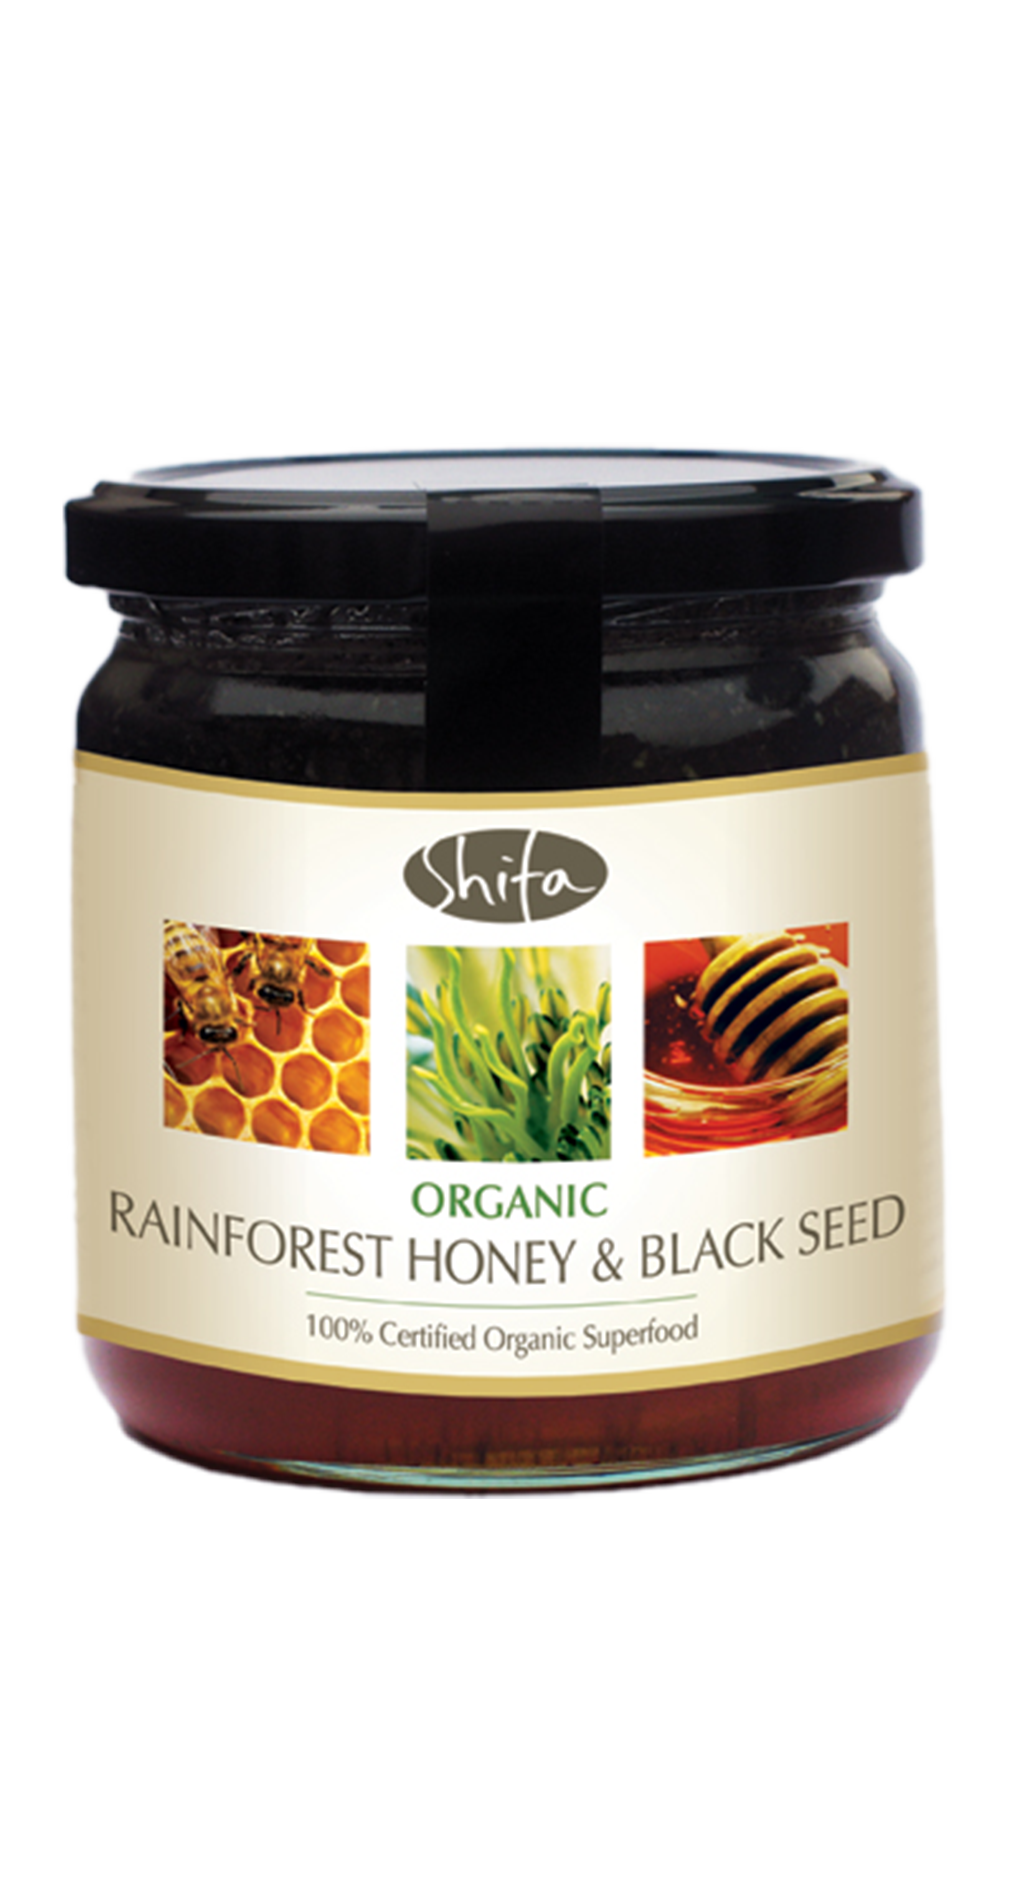 Organic Rainforest Honey with Black Seed